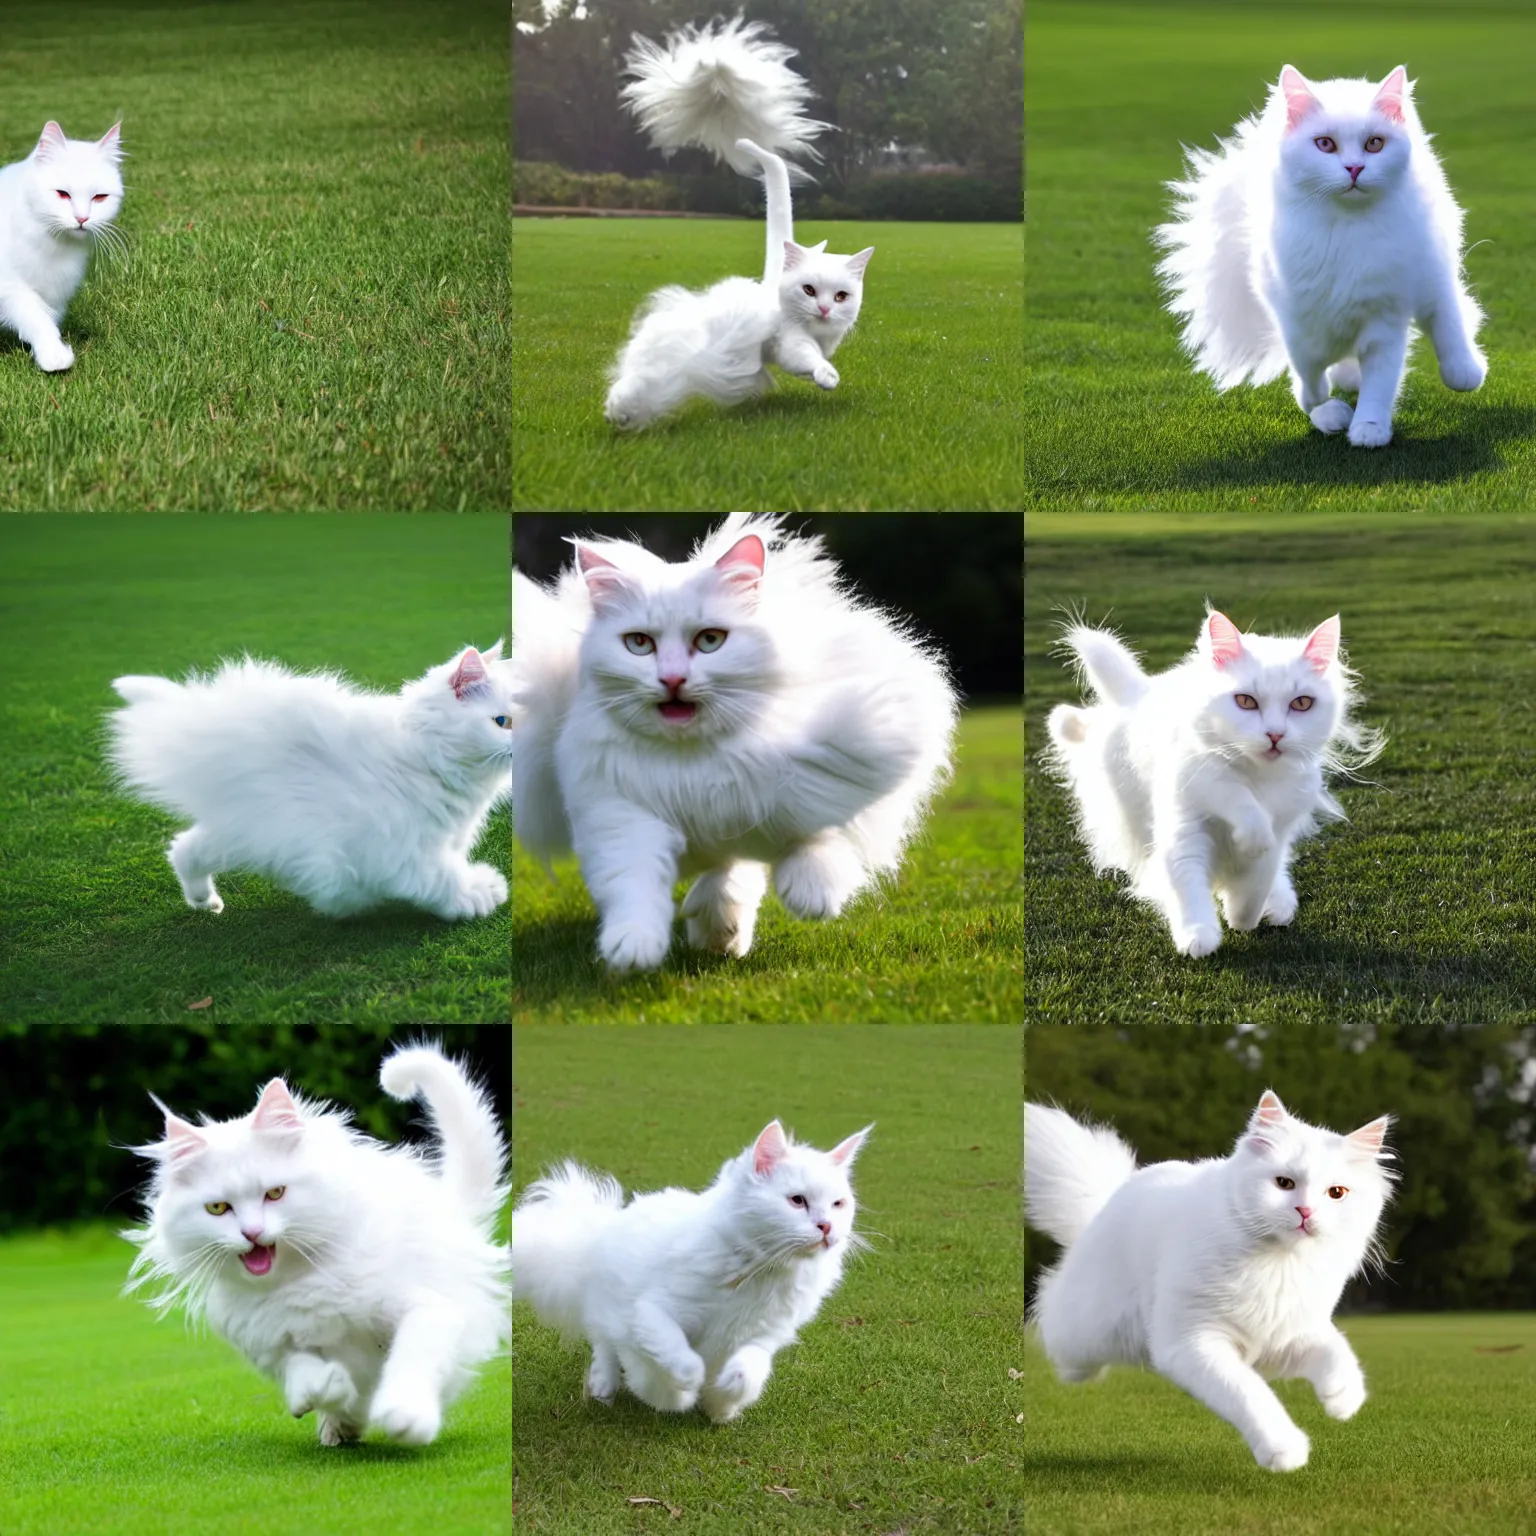 Prompt: three legged white fluffy cat running on the grass